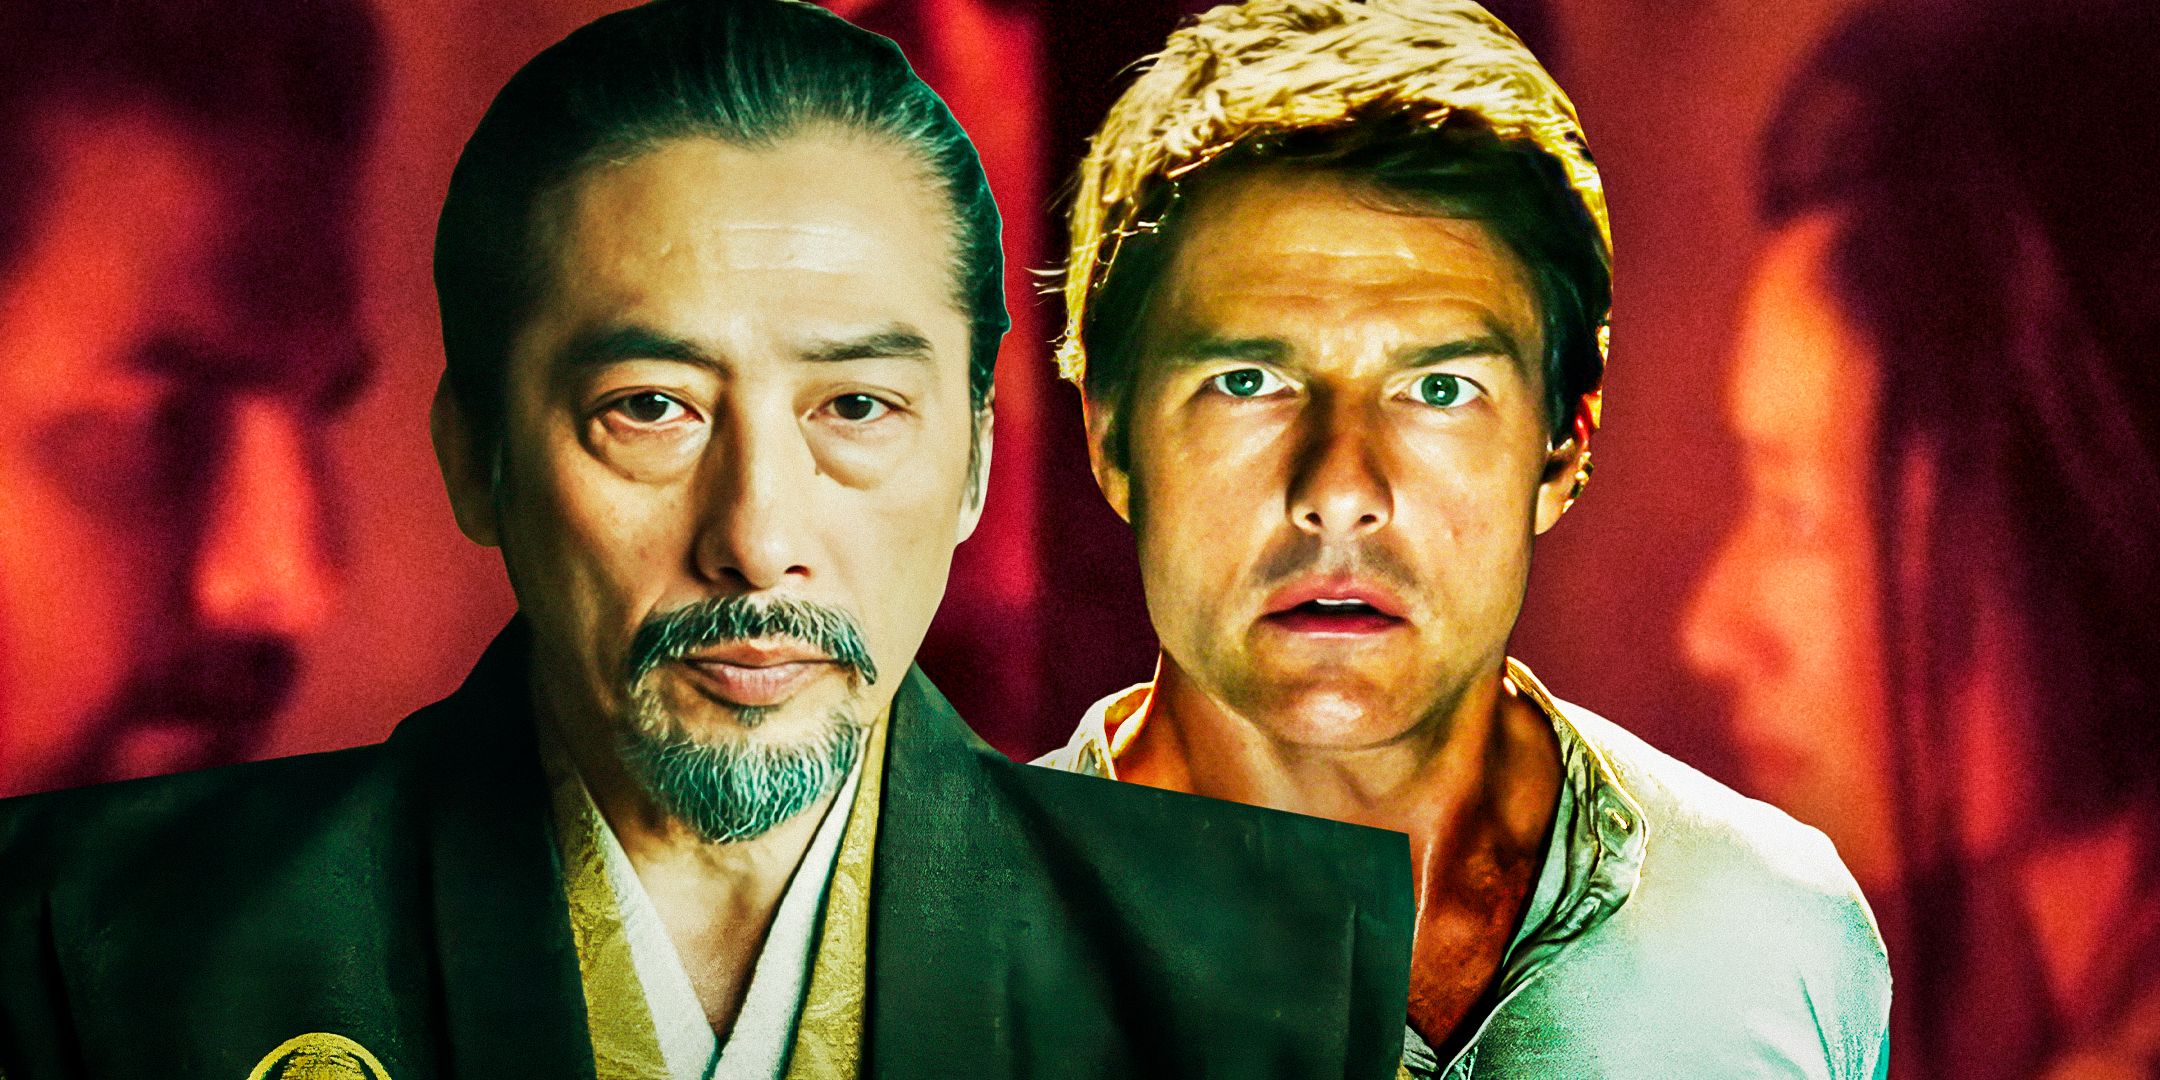 Hiroyuki Sanada as Yoshii Toranaga from Shogun and Tom Cruise